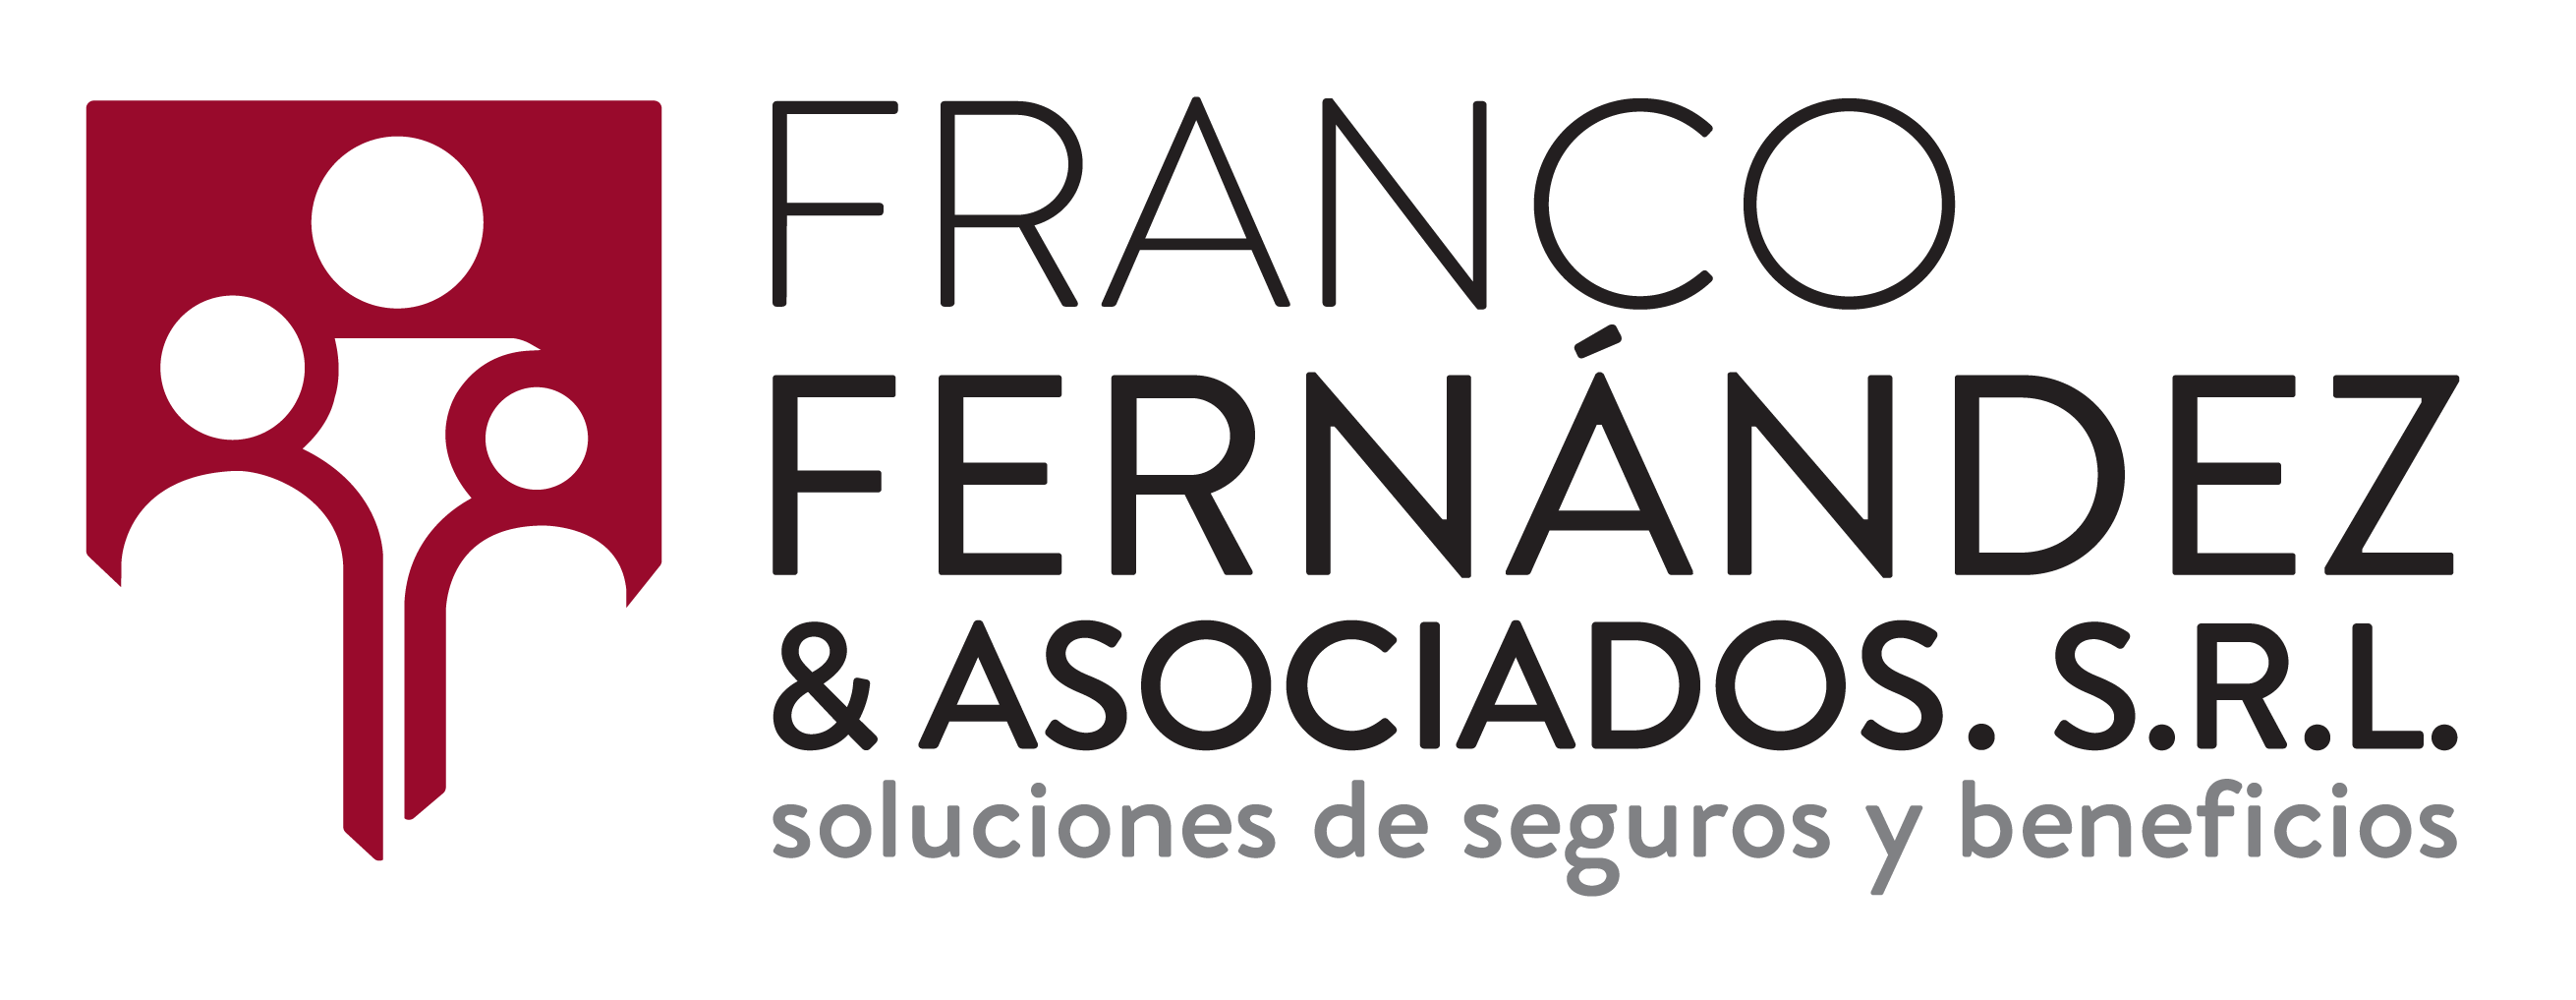 FrancoFernandez.com